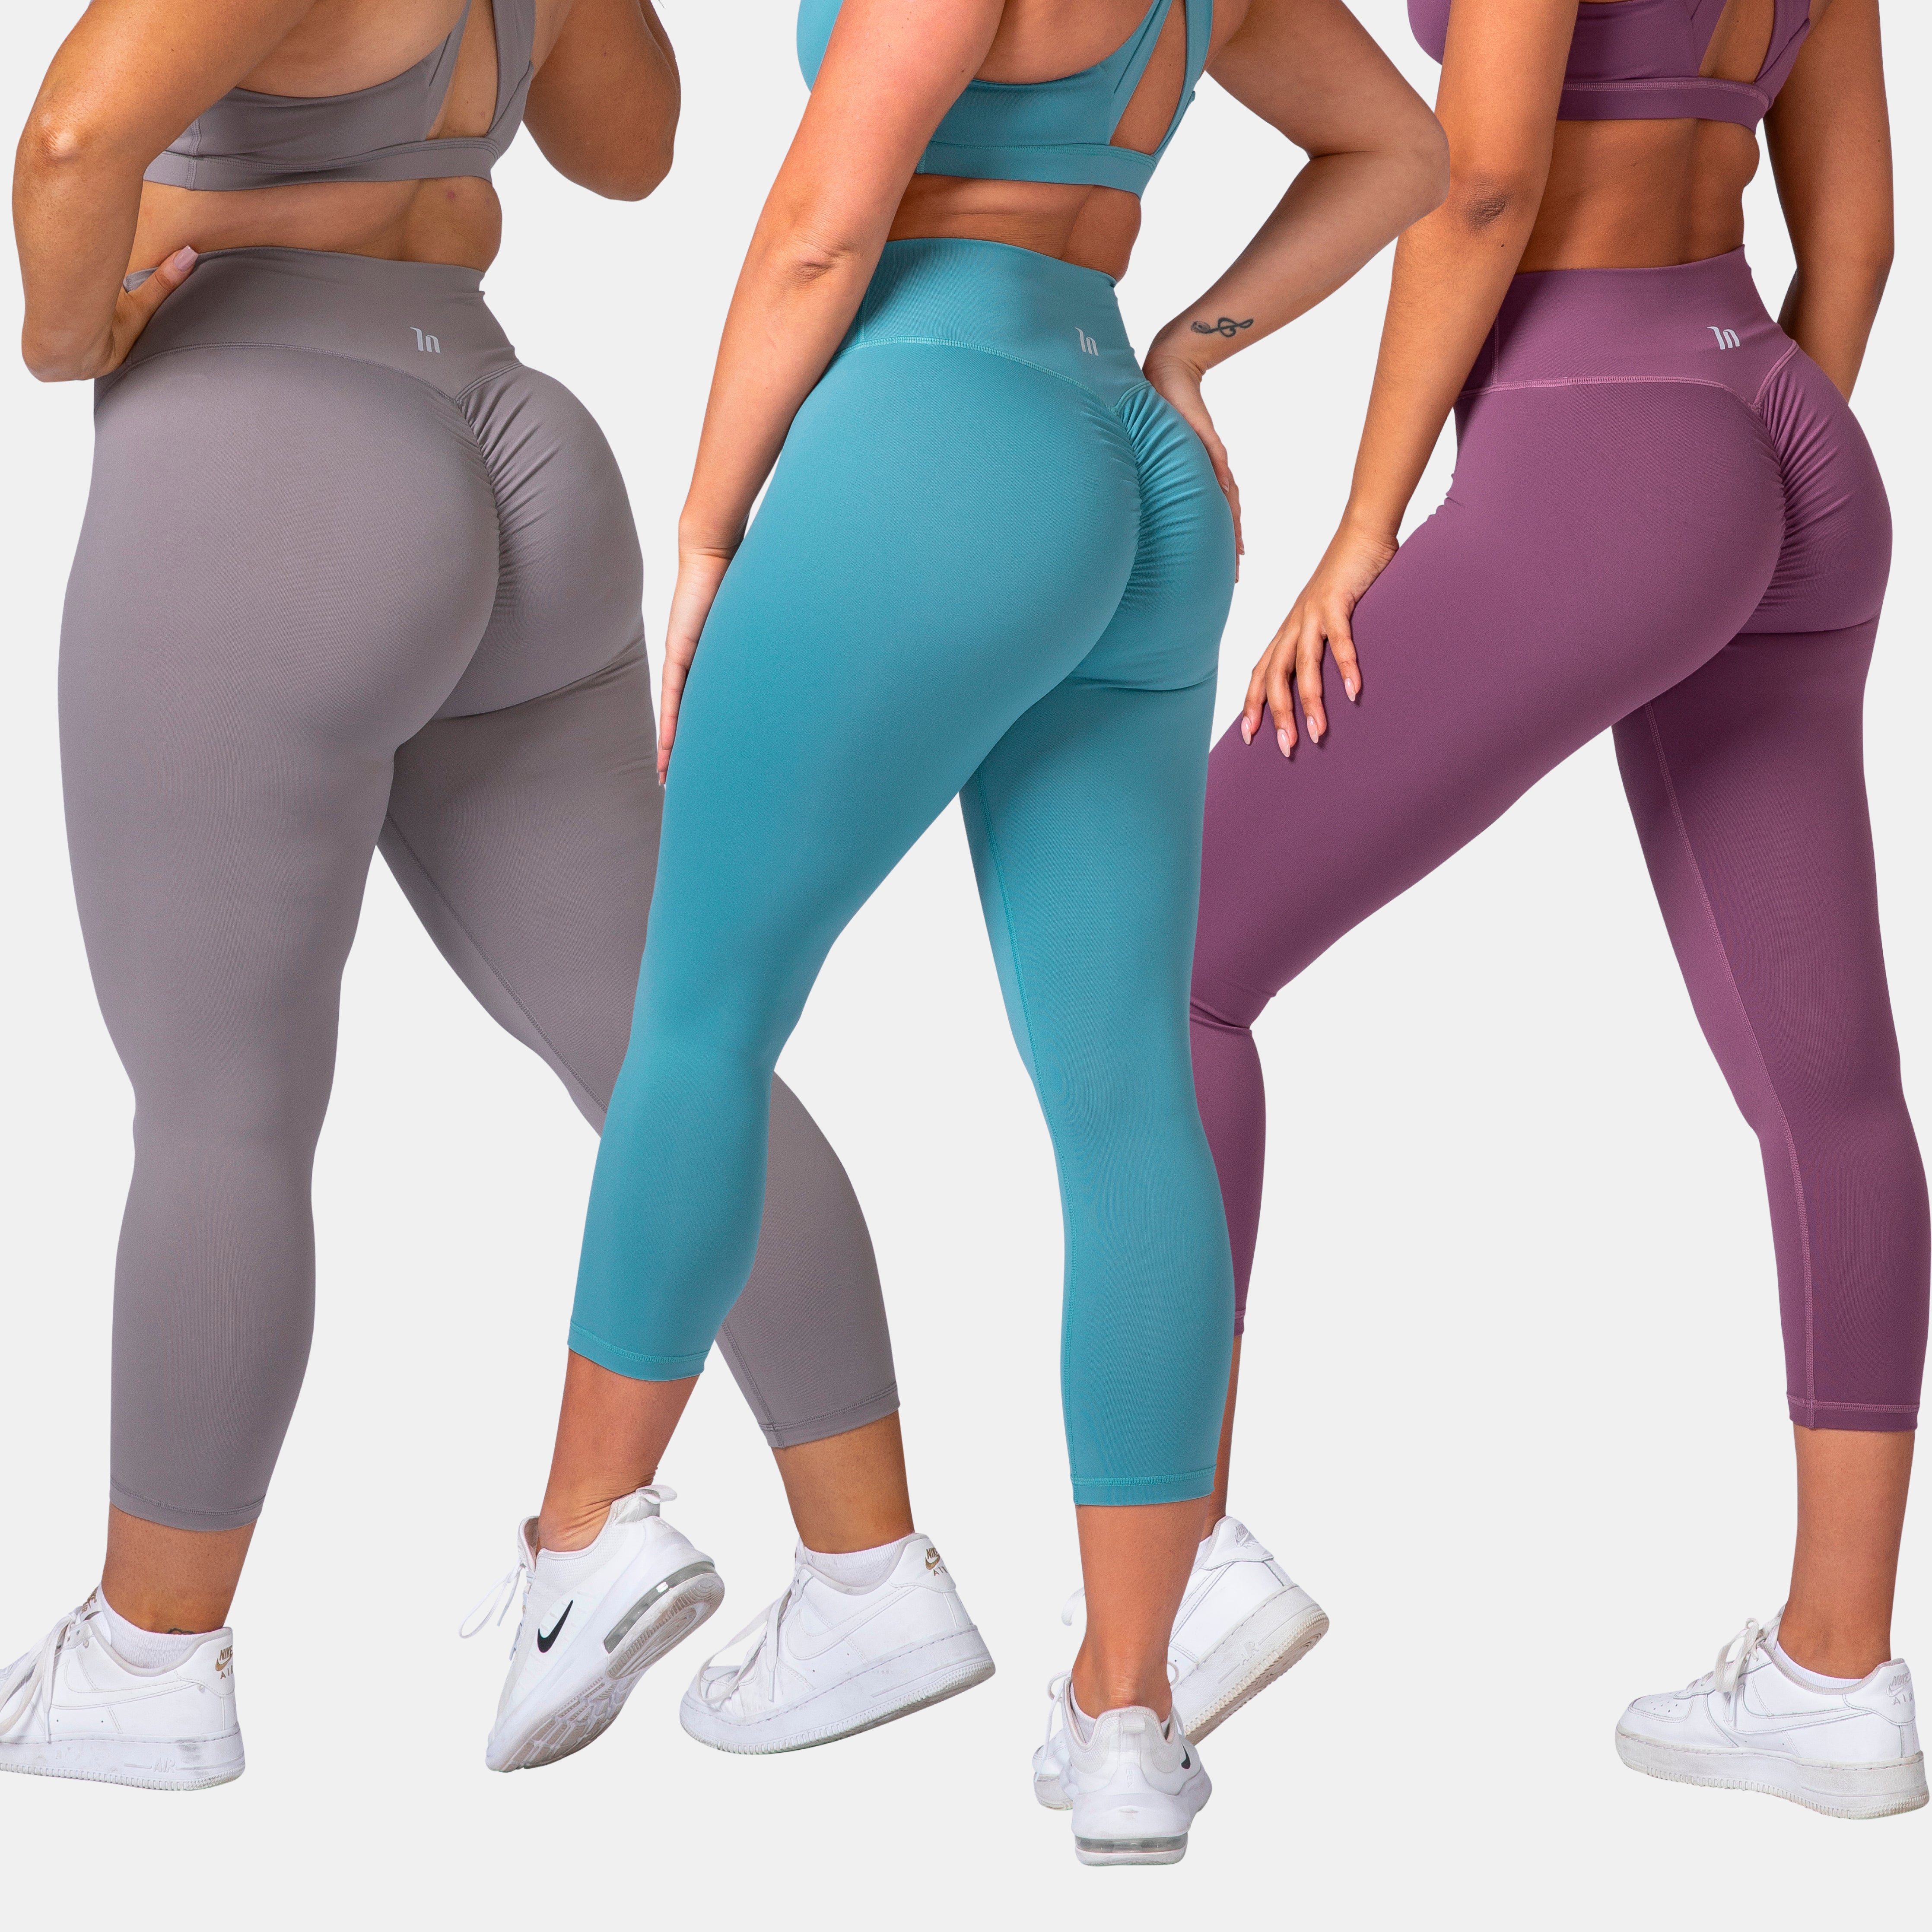 Do Gym Leggings Make Your Bum Look Bigger?, Fitness Blog